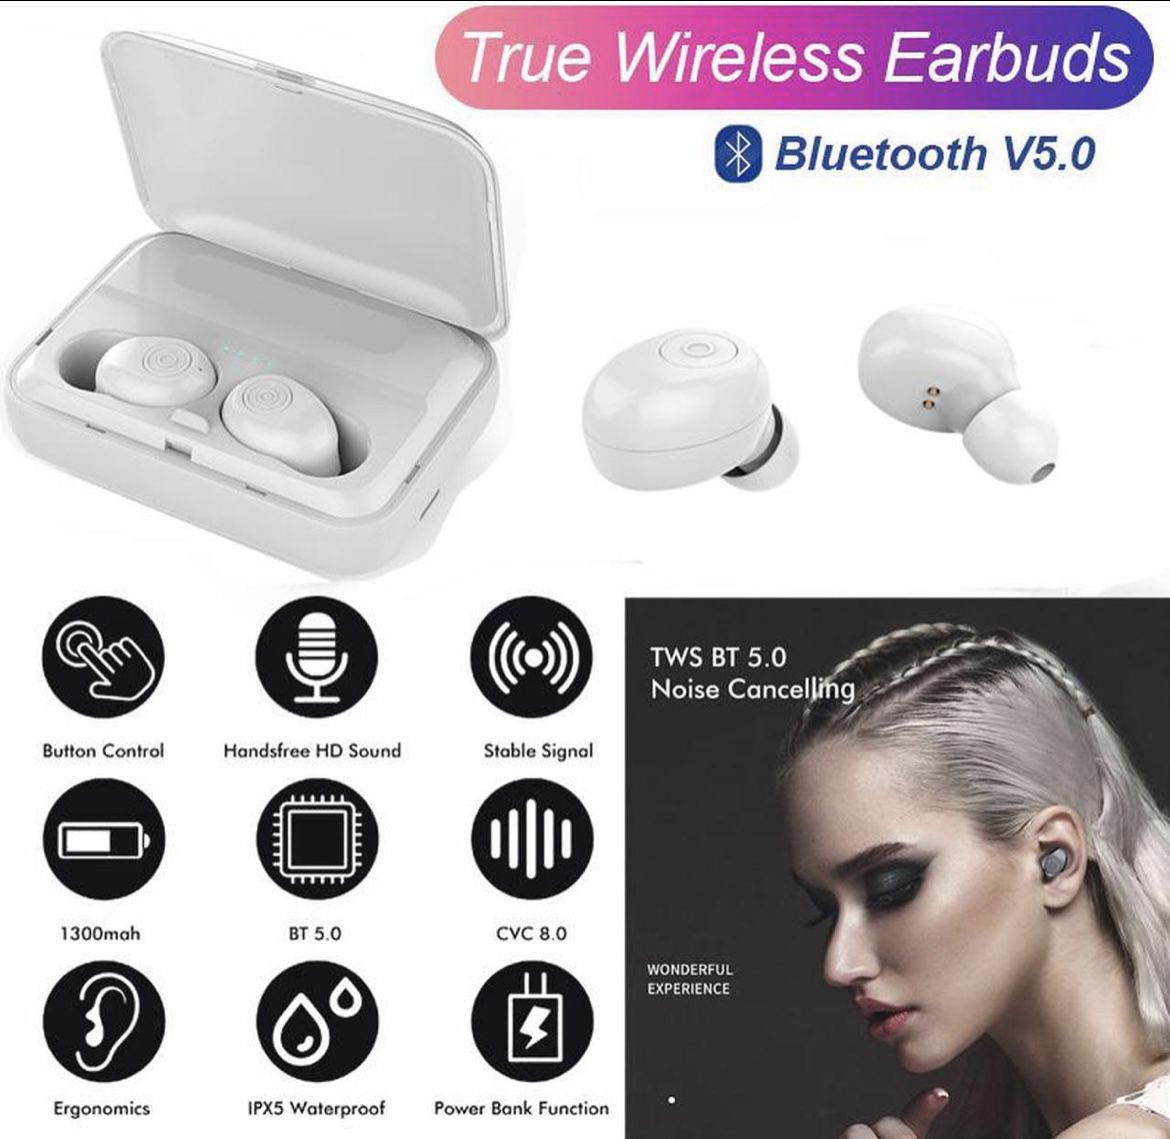 LUOM F9-3 True Wireless Earbuds Bluetooth Headphones, TWS Sport Earbuds IPX7 Waterproof Mini in-Ear Noise Cancelling Earphones, 5H Playtime 3D Stereo 